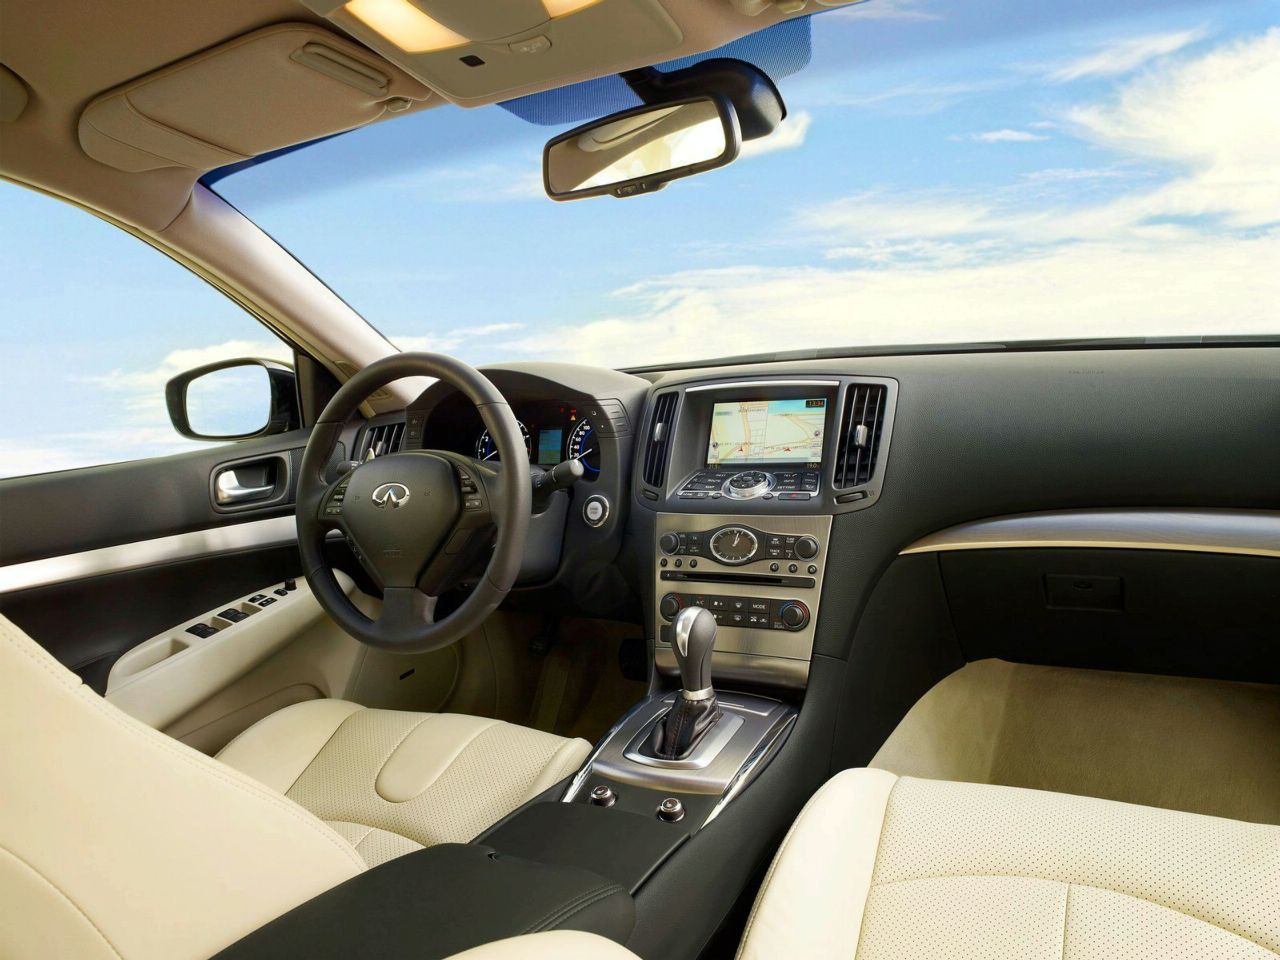 infiniti-g37-sedan-2010-facelift-interior.jpg